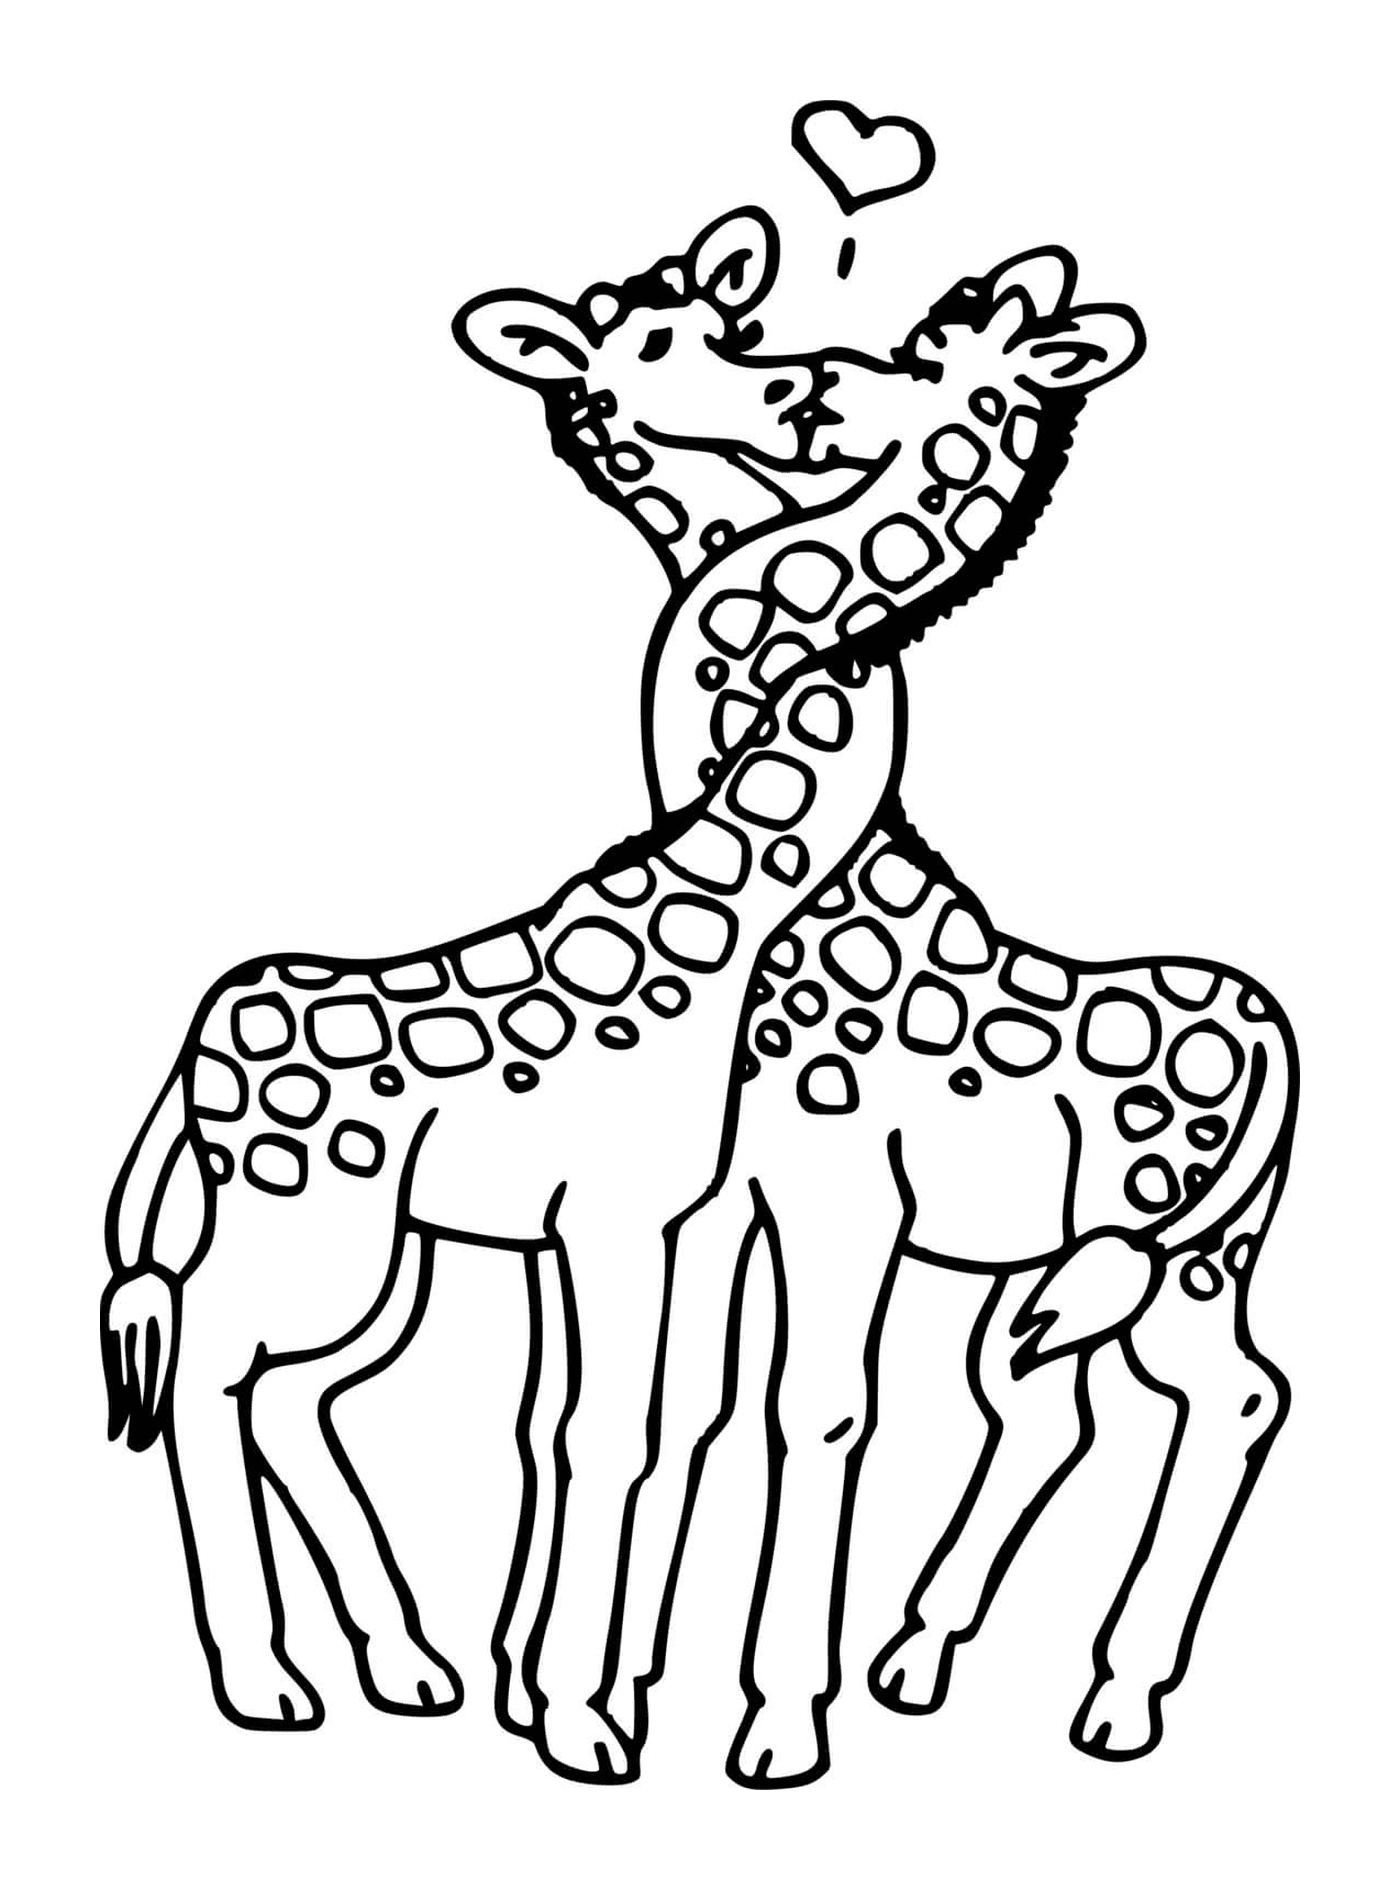  Dos jirafas besándose 